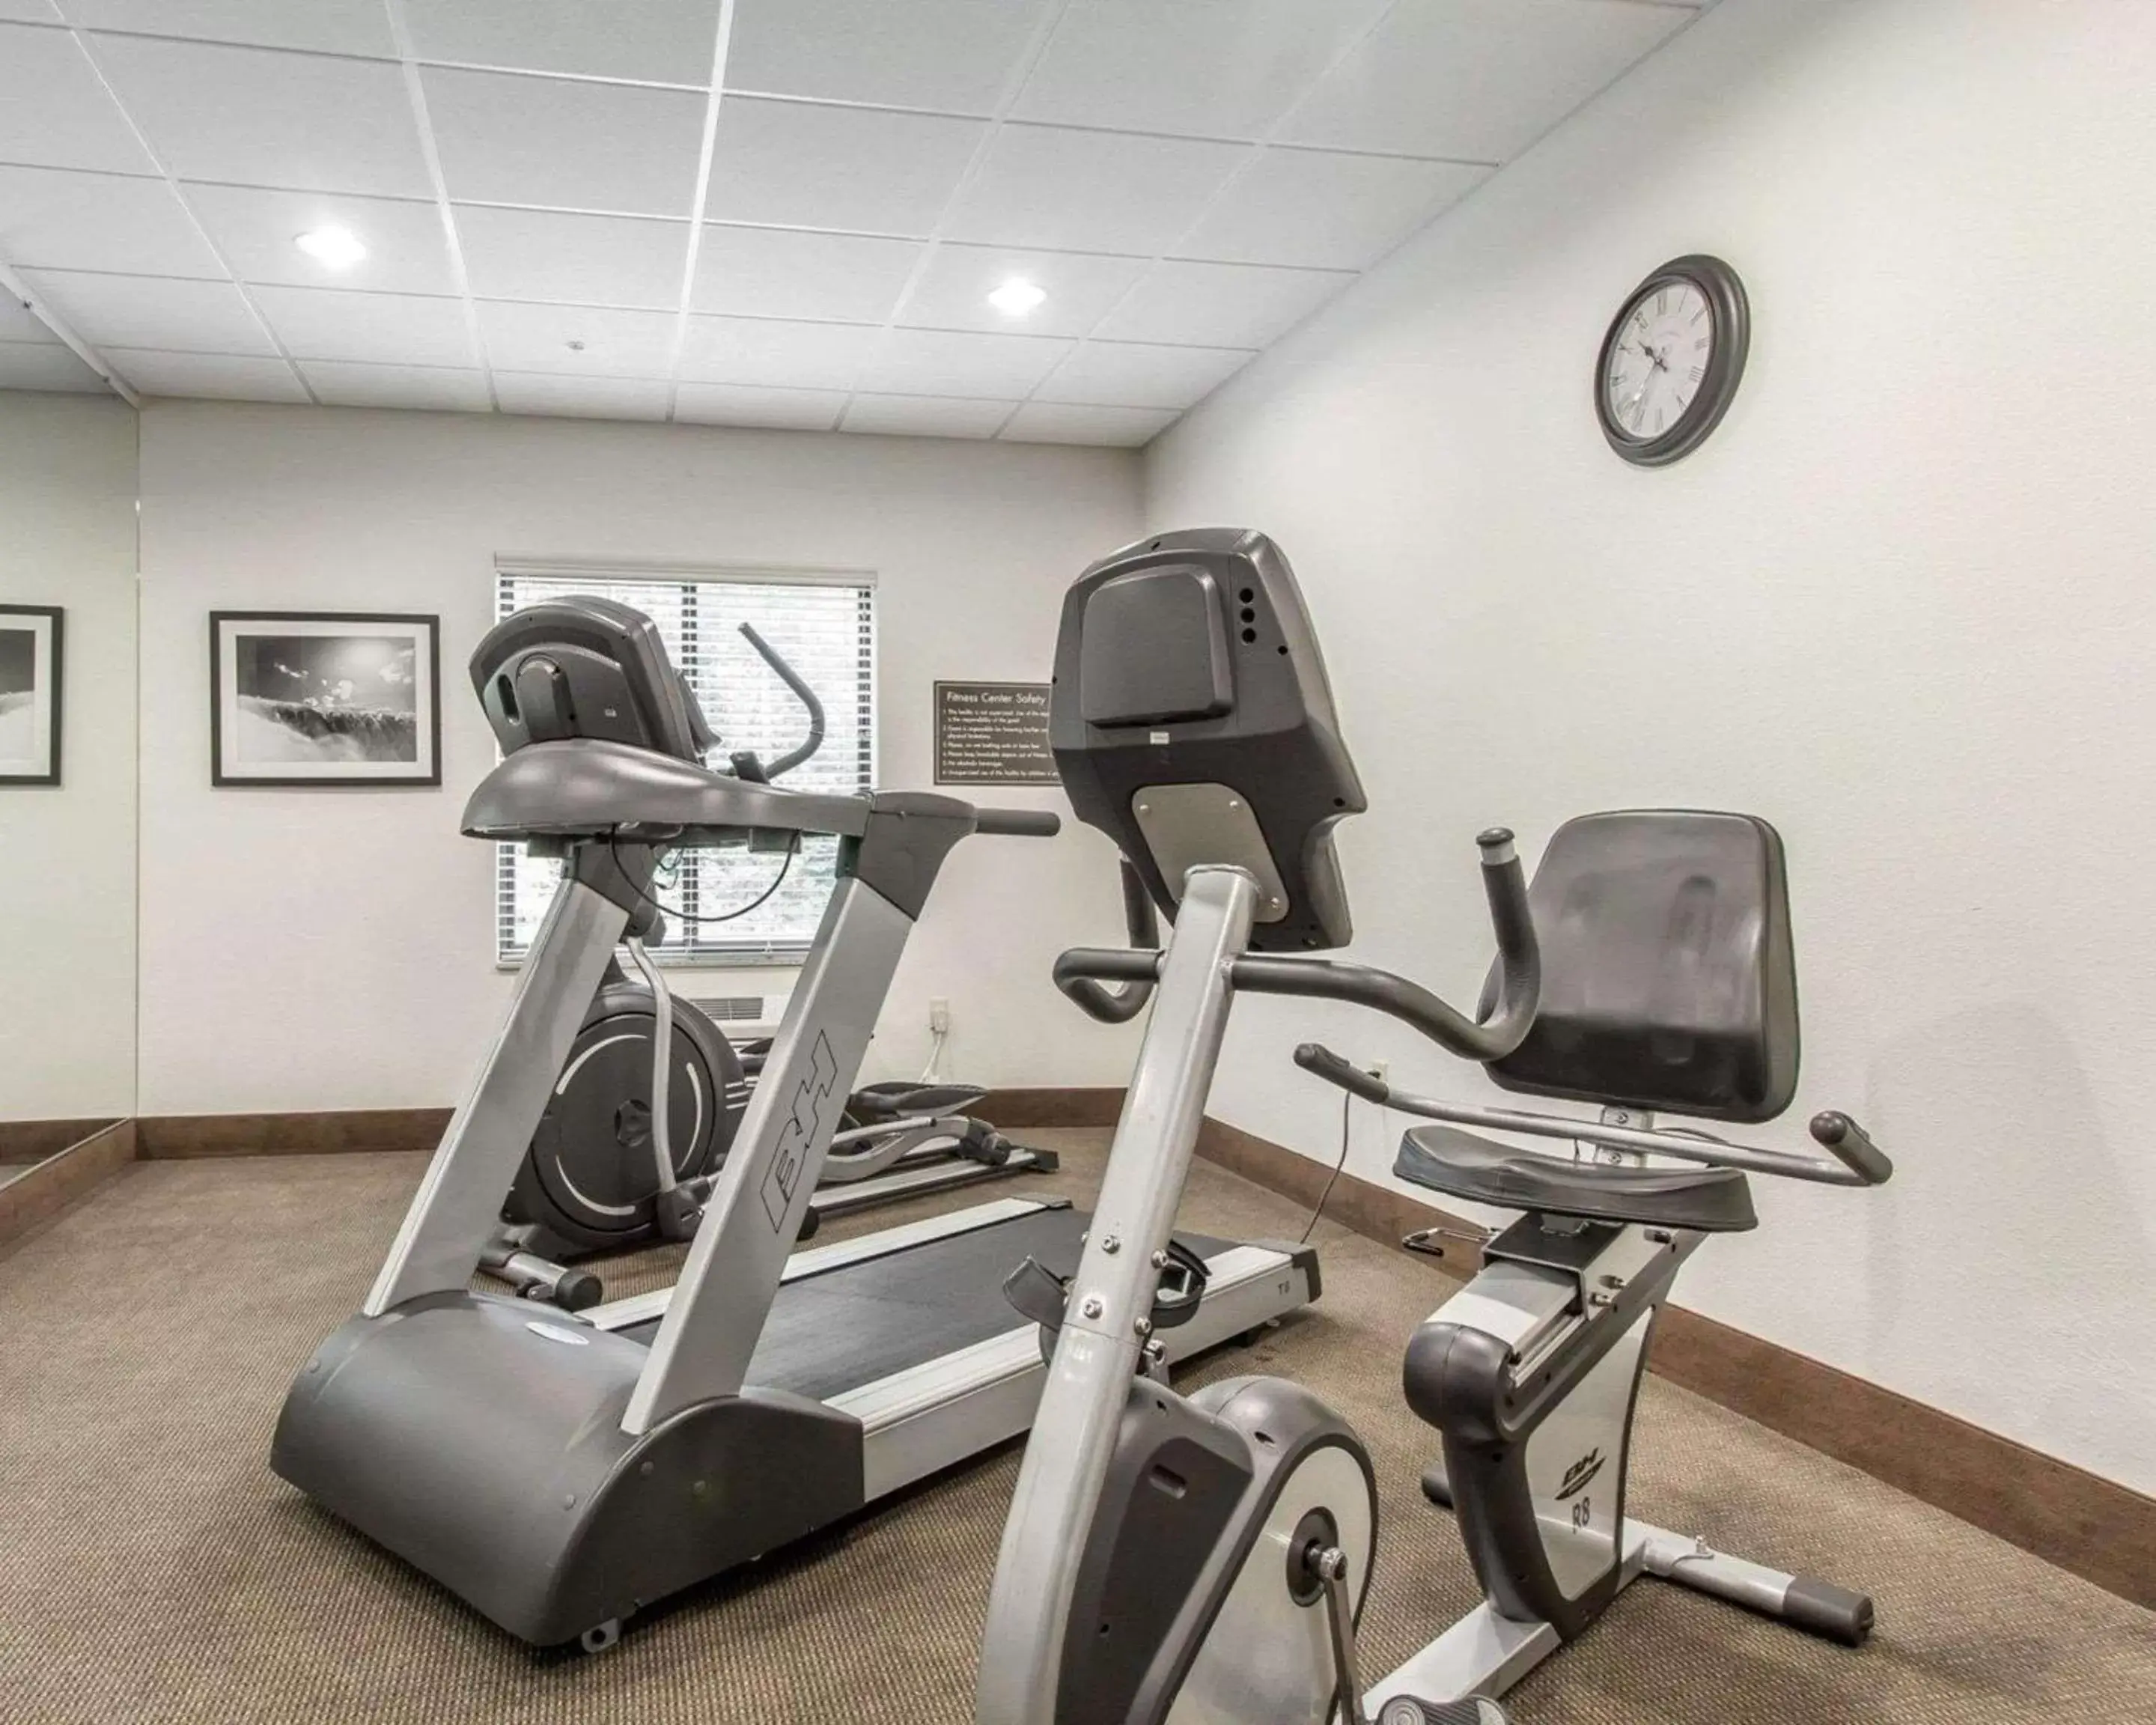 Fitness centre/facilities, Fitness Center/Facilities in Sleep Inn & Suites Middlesboro